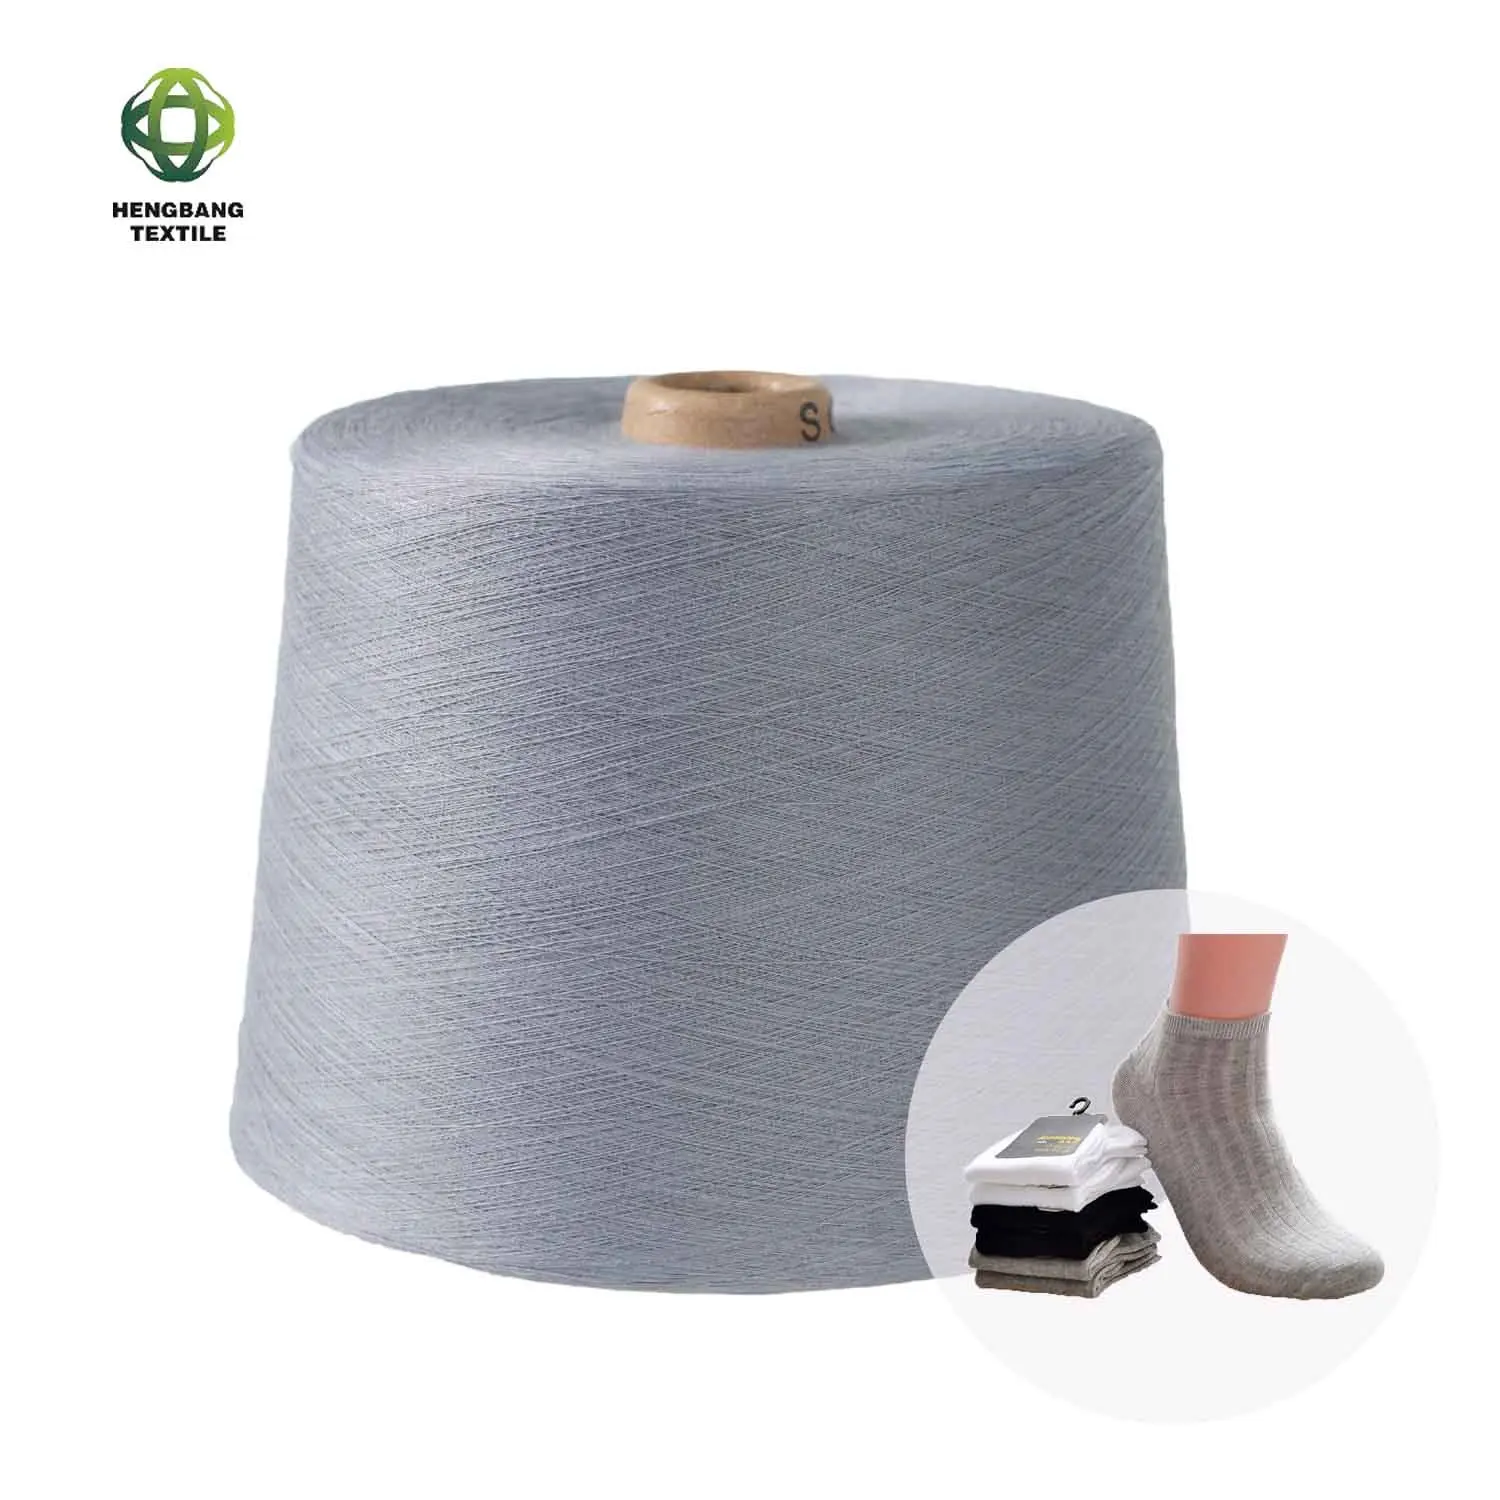 Hengbang 직물 핫 세일 싼 가격 재생된 면 털실 뜨개질을 하는 면 털실 제조자 면 양말 털실 공장